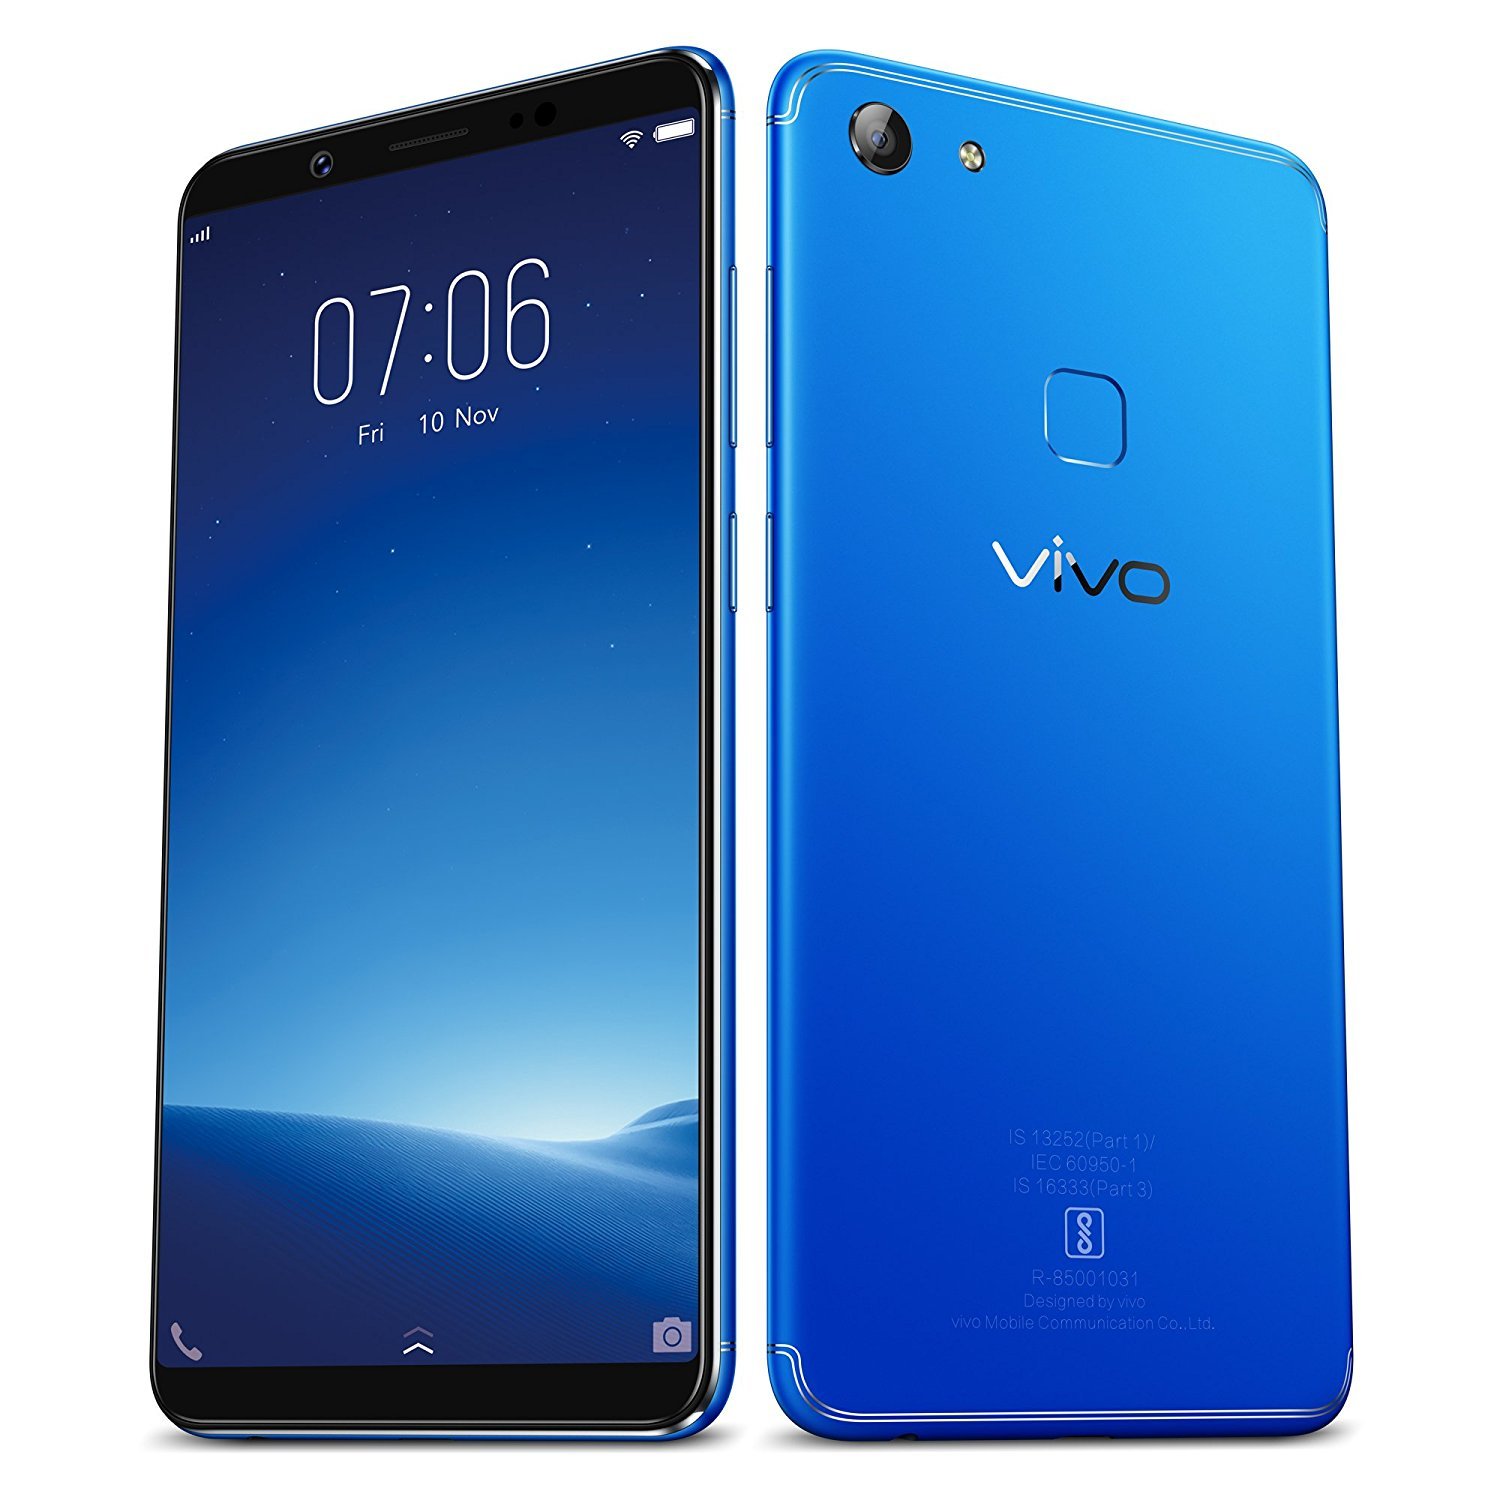 India Gets Vivo V7 in Energetic Blue - Gizmochina